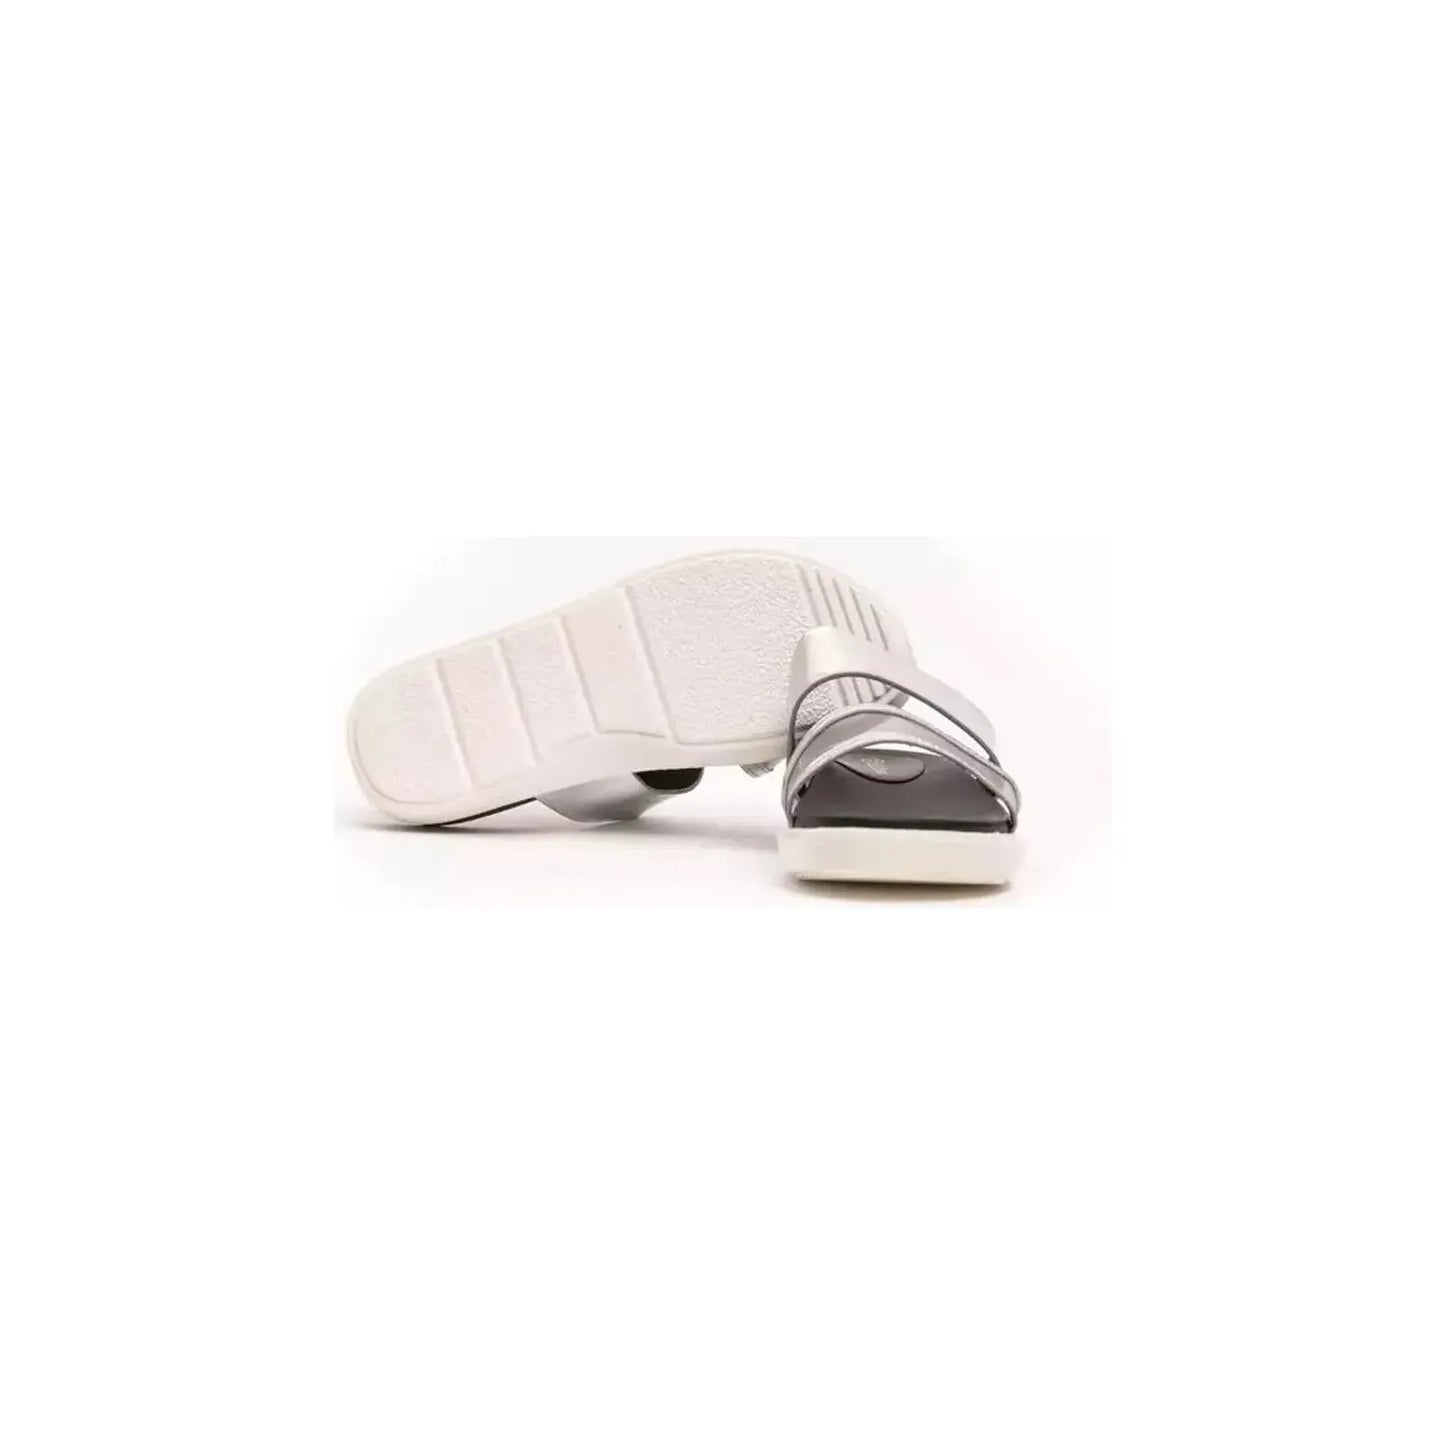 Péché Originel Chic Rhinestone Embellished Dual-Strap Sandals silver-polyurethane-sandal stock_product_image_18724_1108998493-15-822451a5-e79.webp